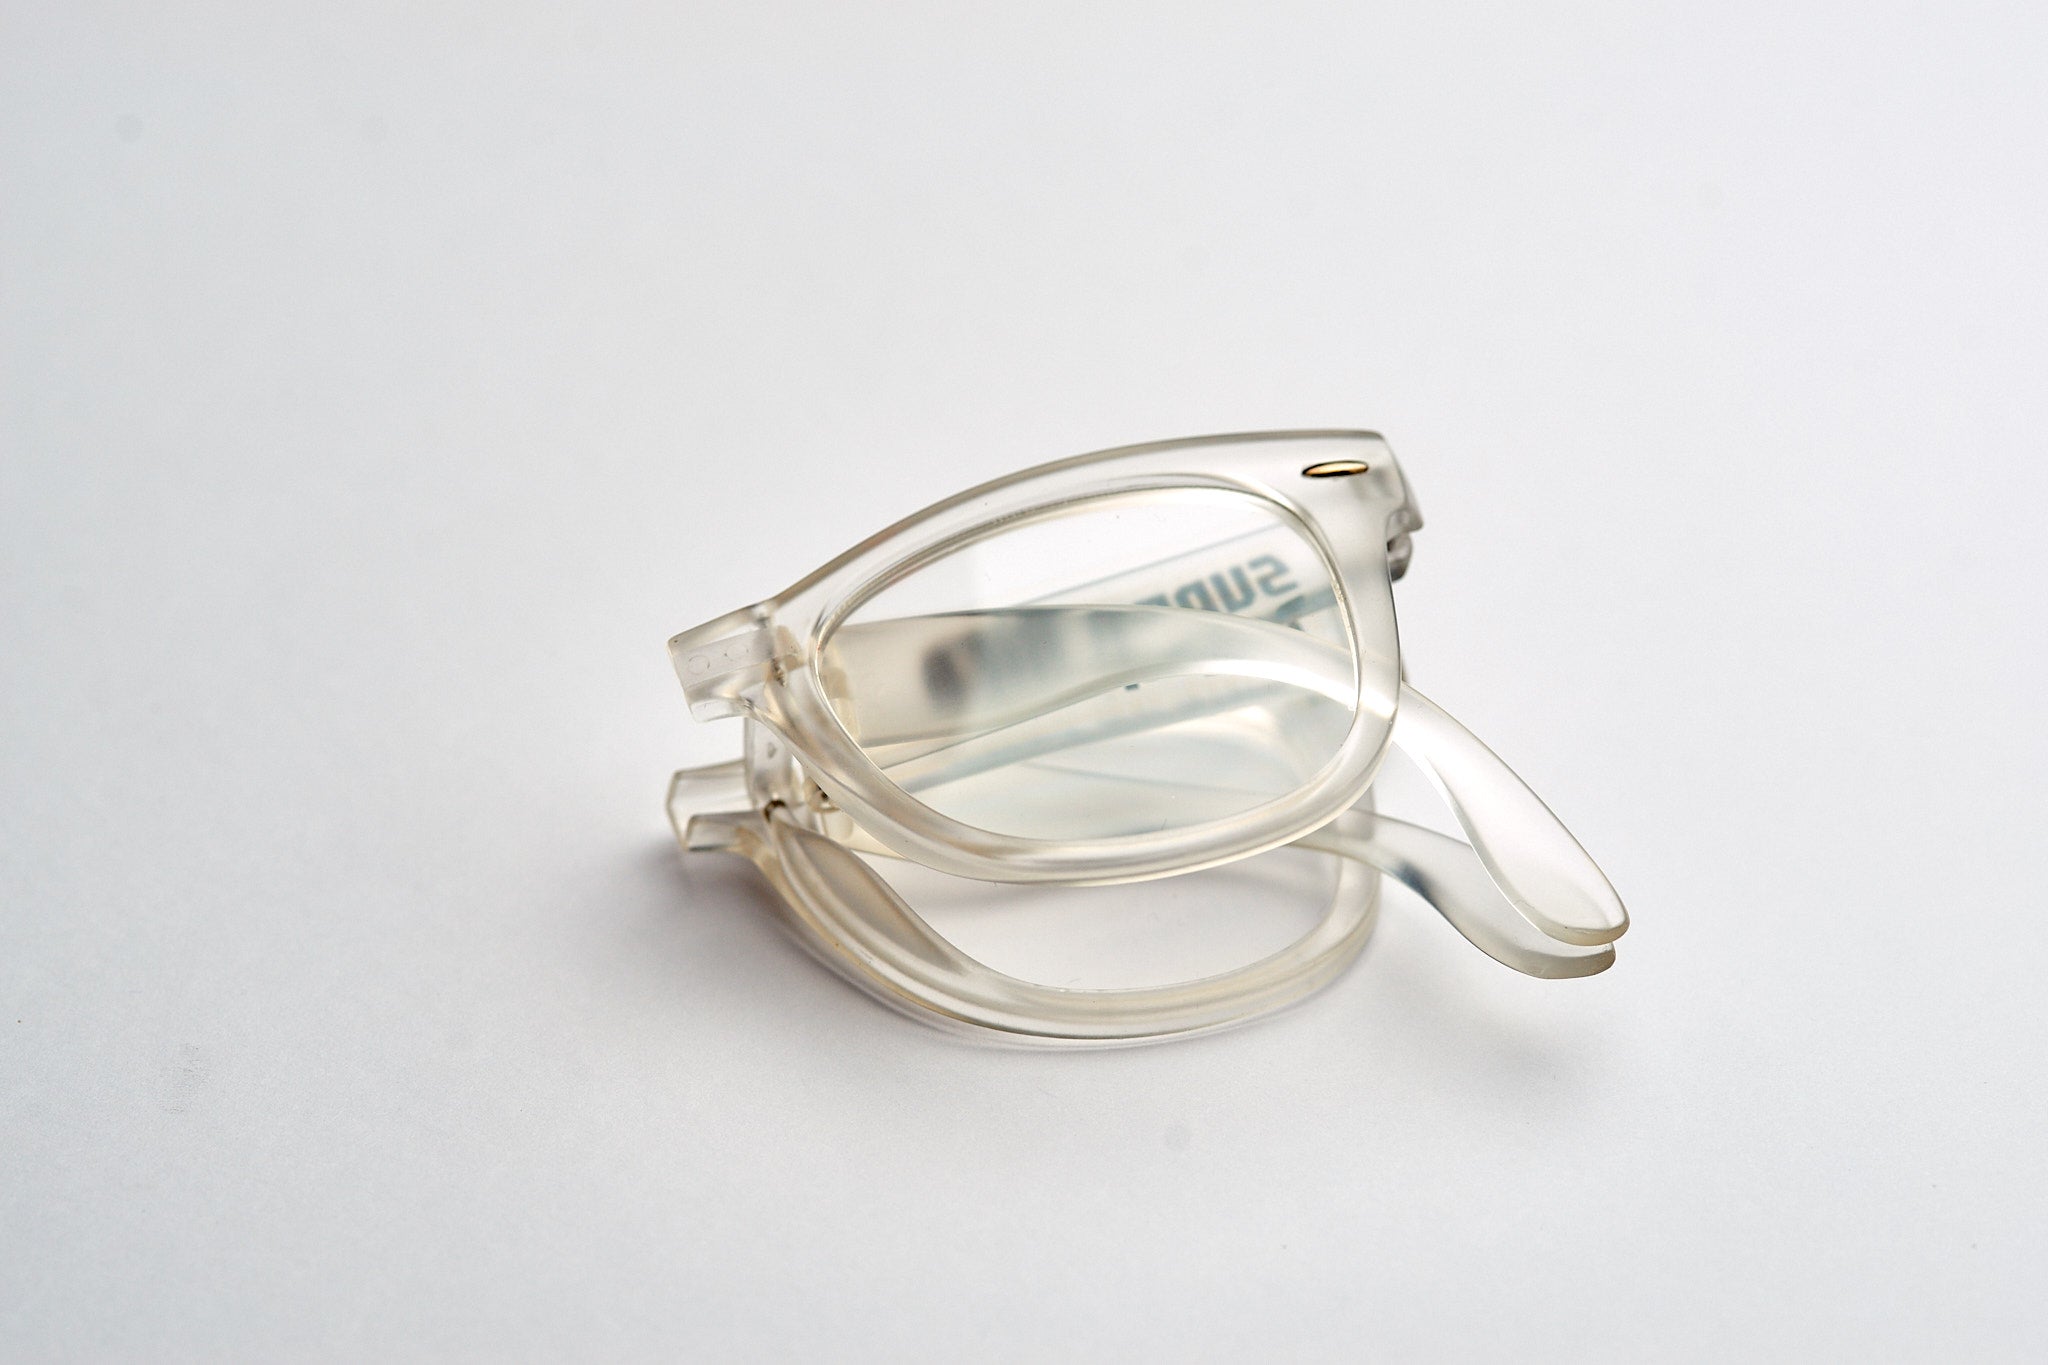 Matte Transparent Clear Firework Foldable Diffraction Glasses - SuperFried